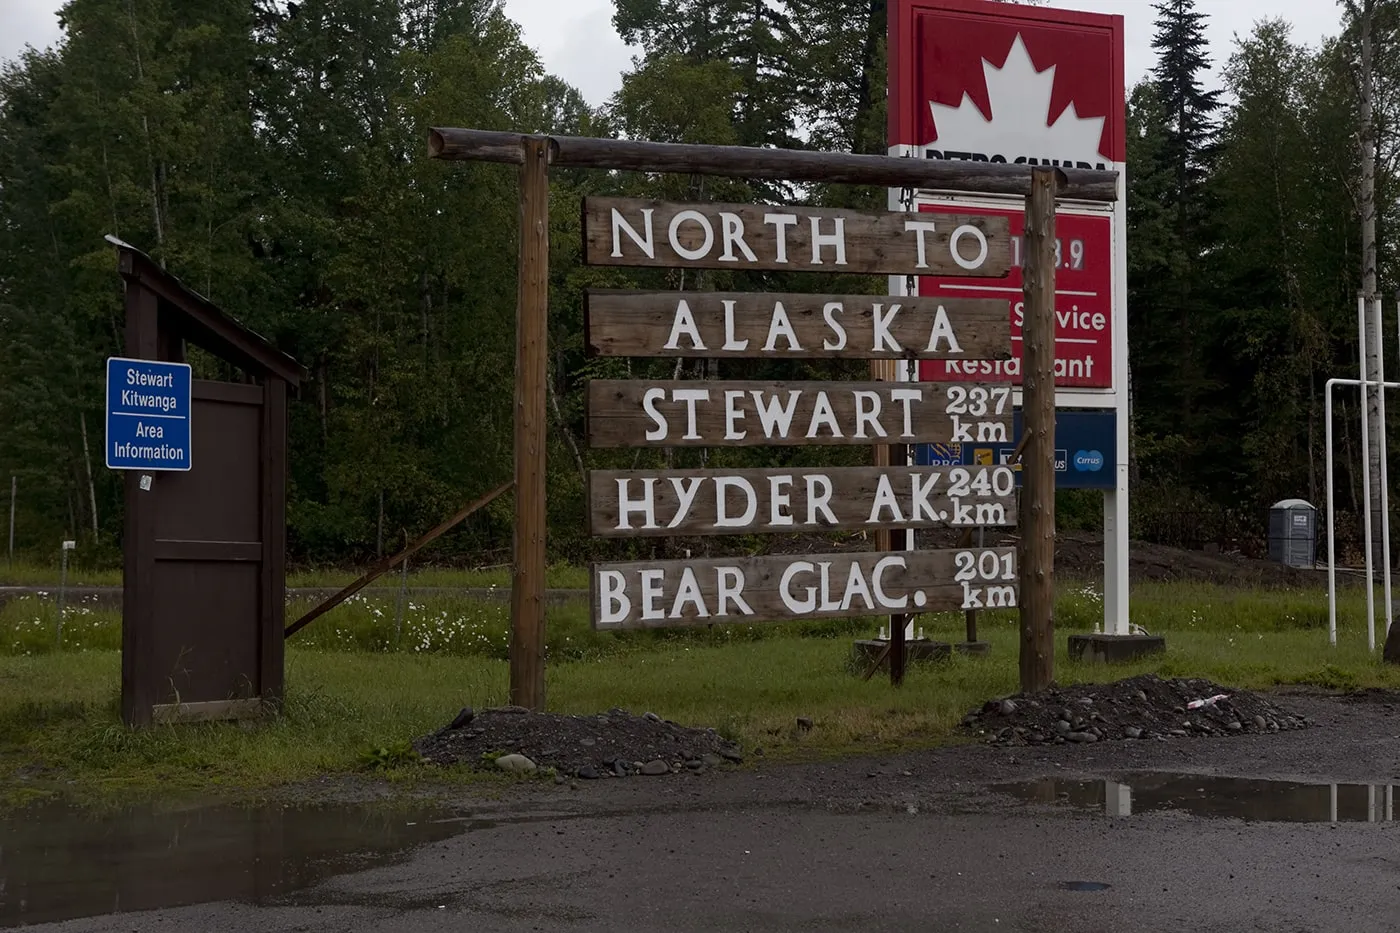 North to Alaska, Stewart, Hyder, Bear Glacier sign in Kitwanga,British Columbia, Canada.